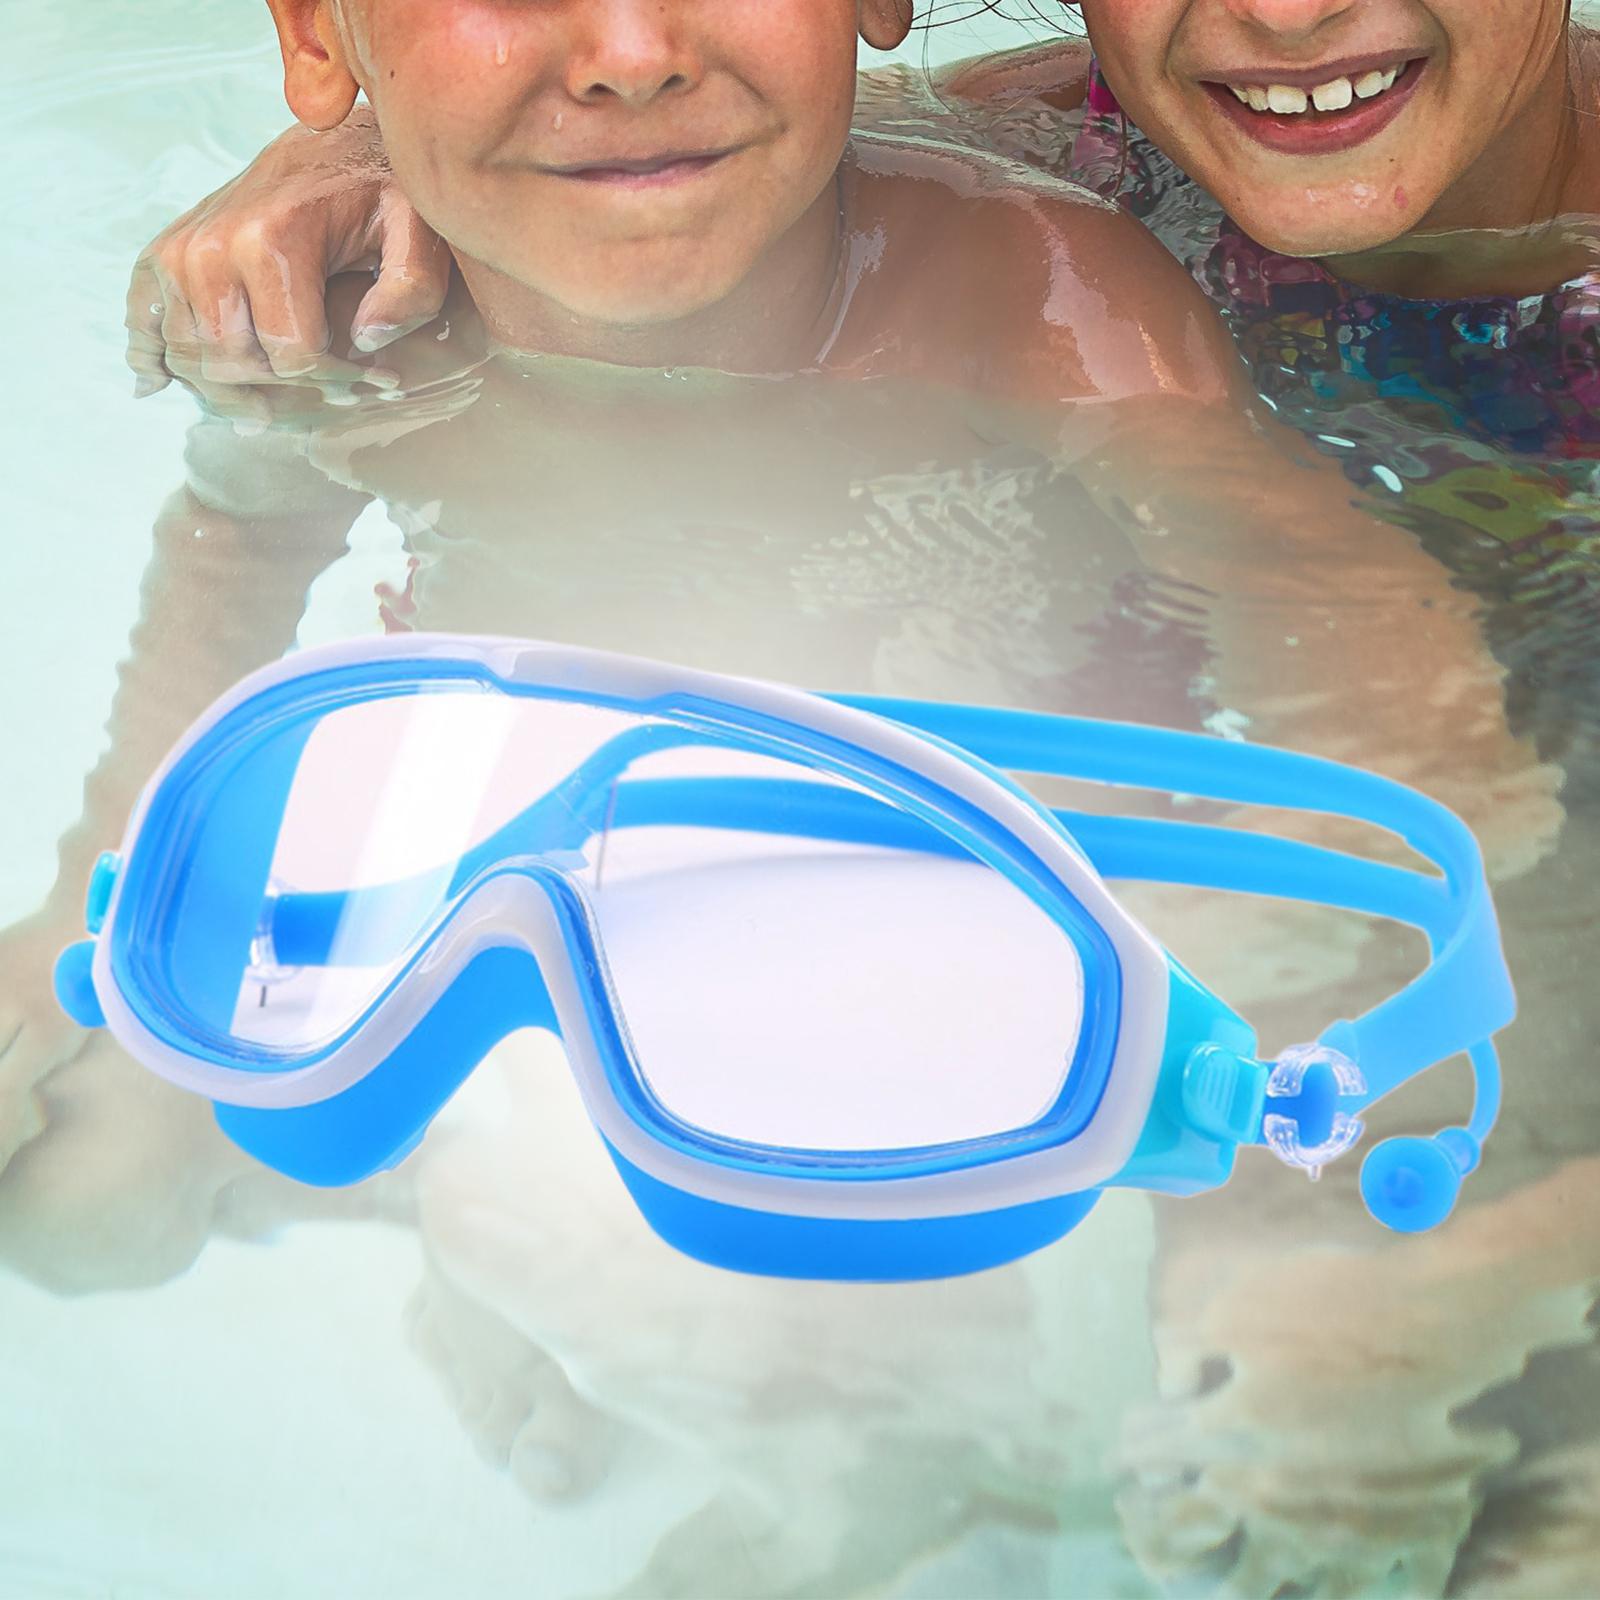 Kids Swim Goggles with Earplug Adjustable for Kids 6-14 Teenagers Boys Girls Blue